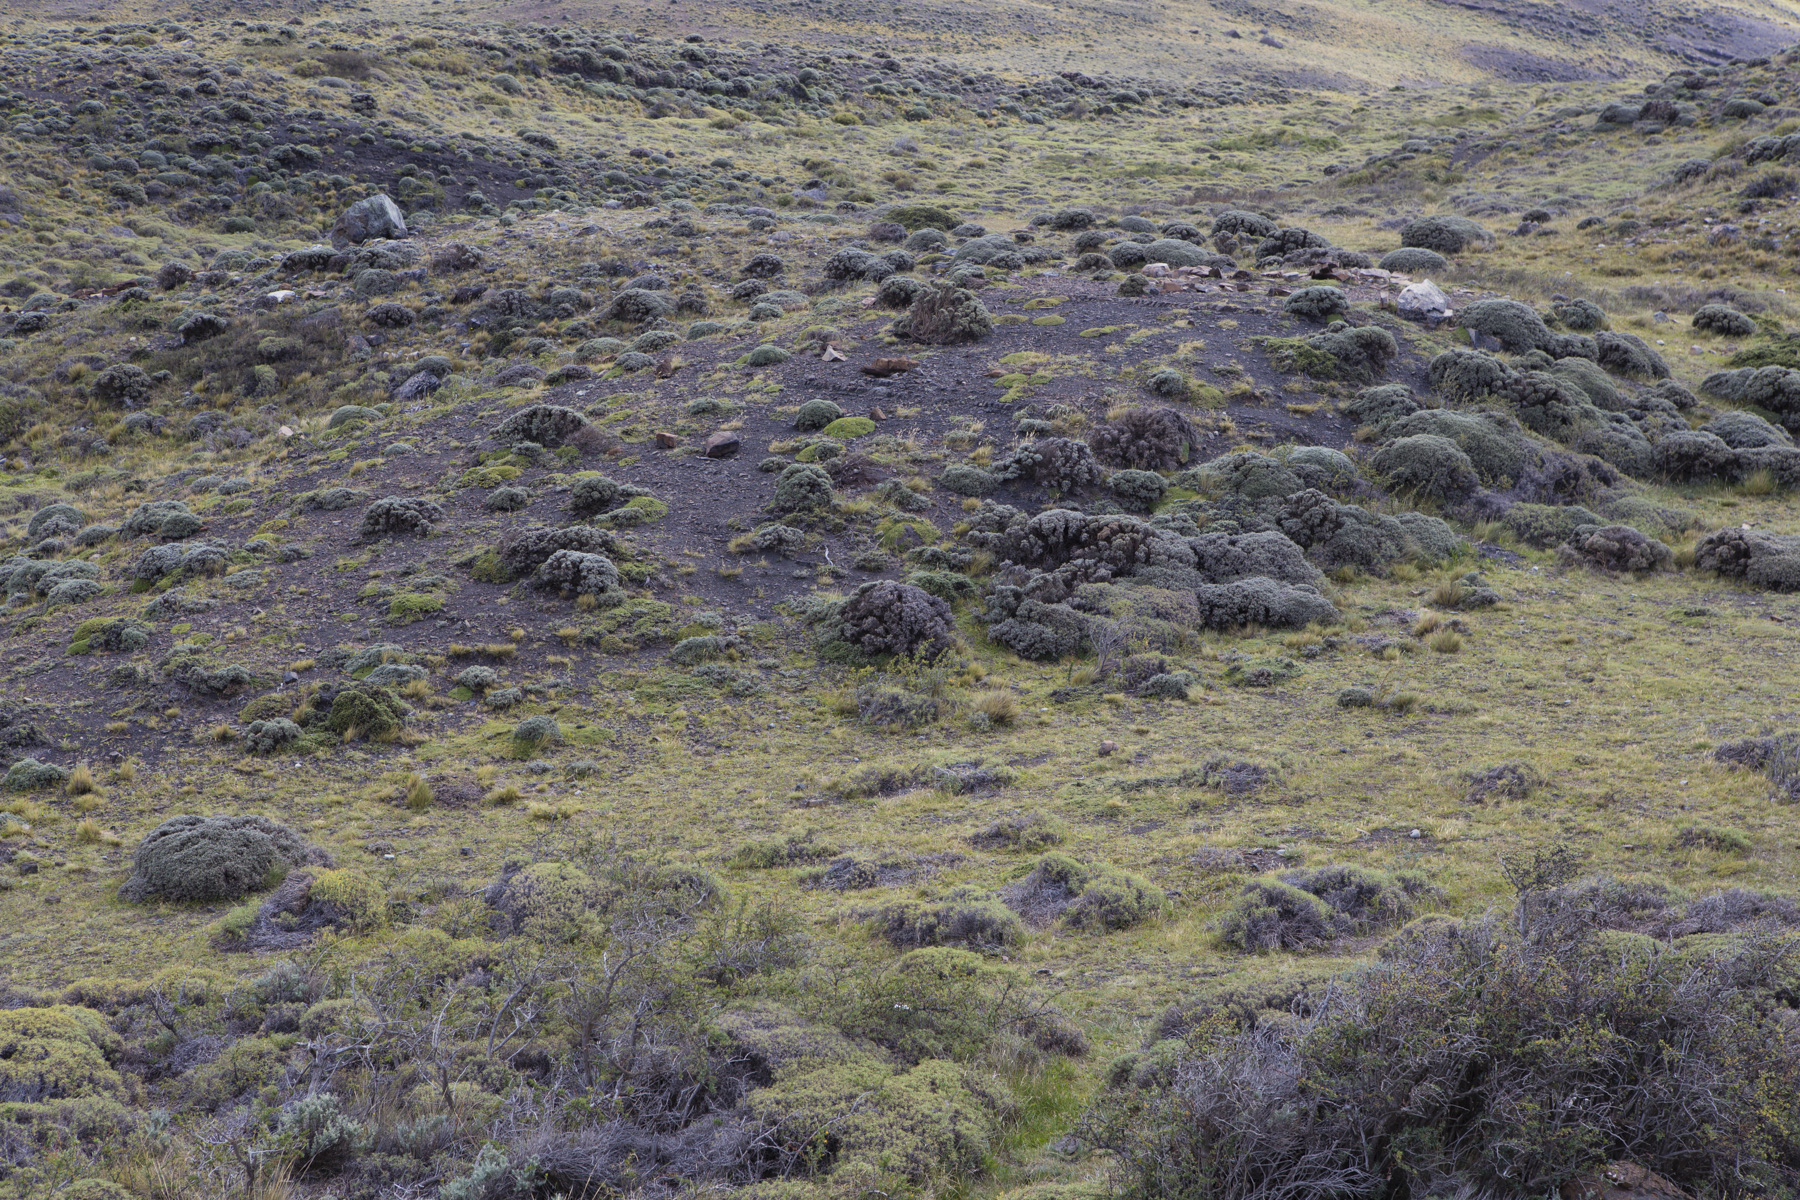 Patagonia greenery and vegetation